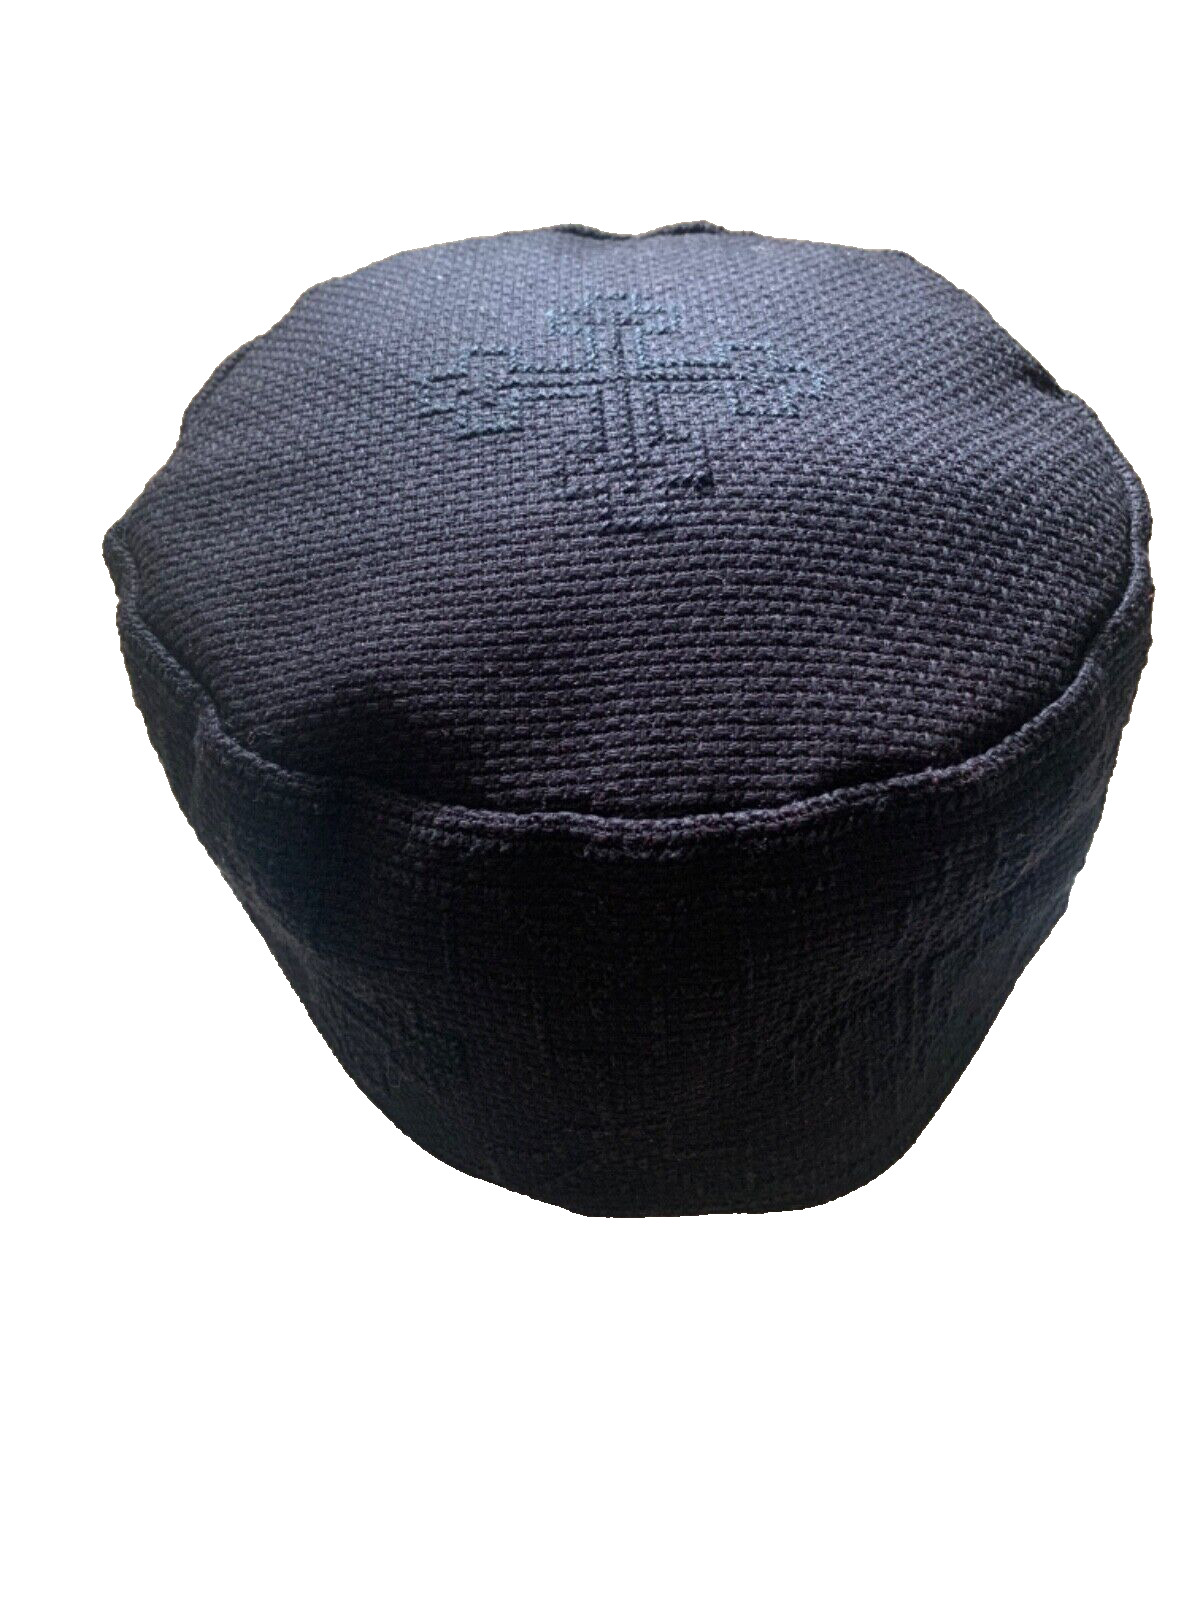 Orthodox Christian skufia embroidered black hat